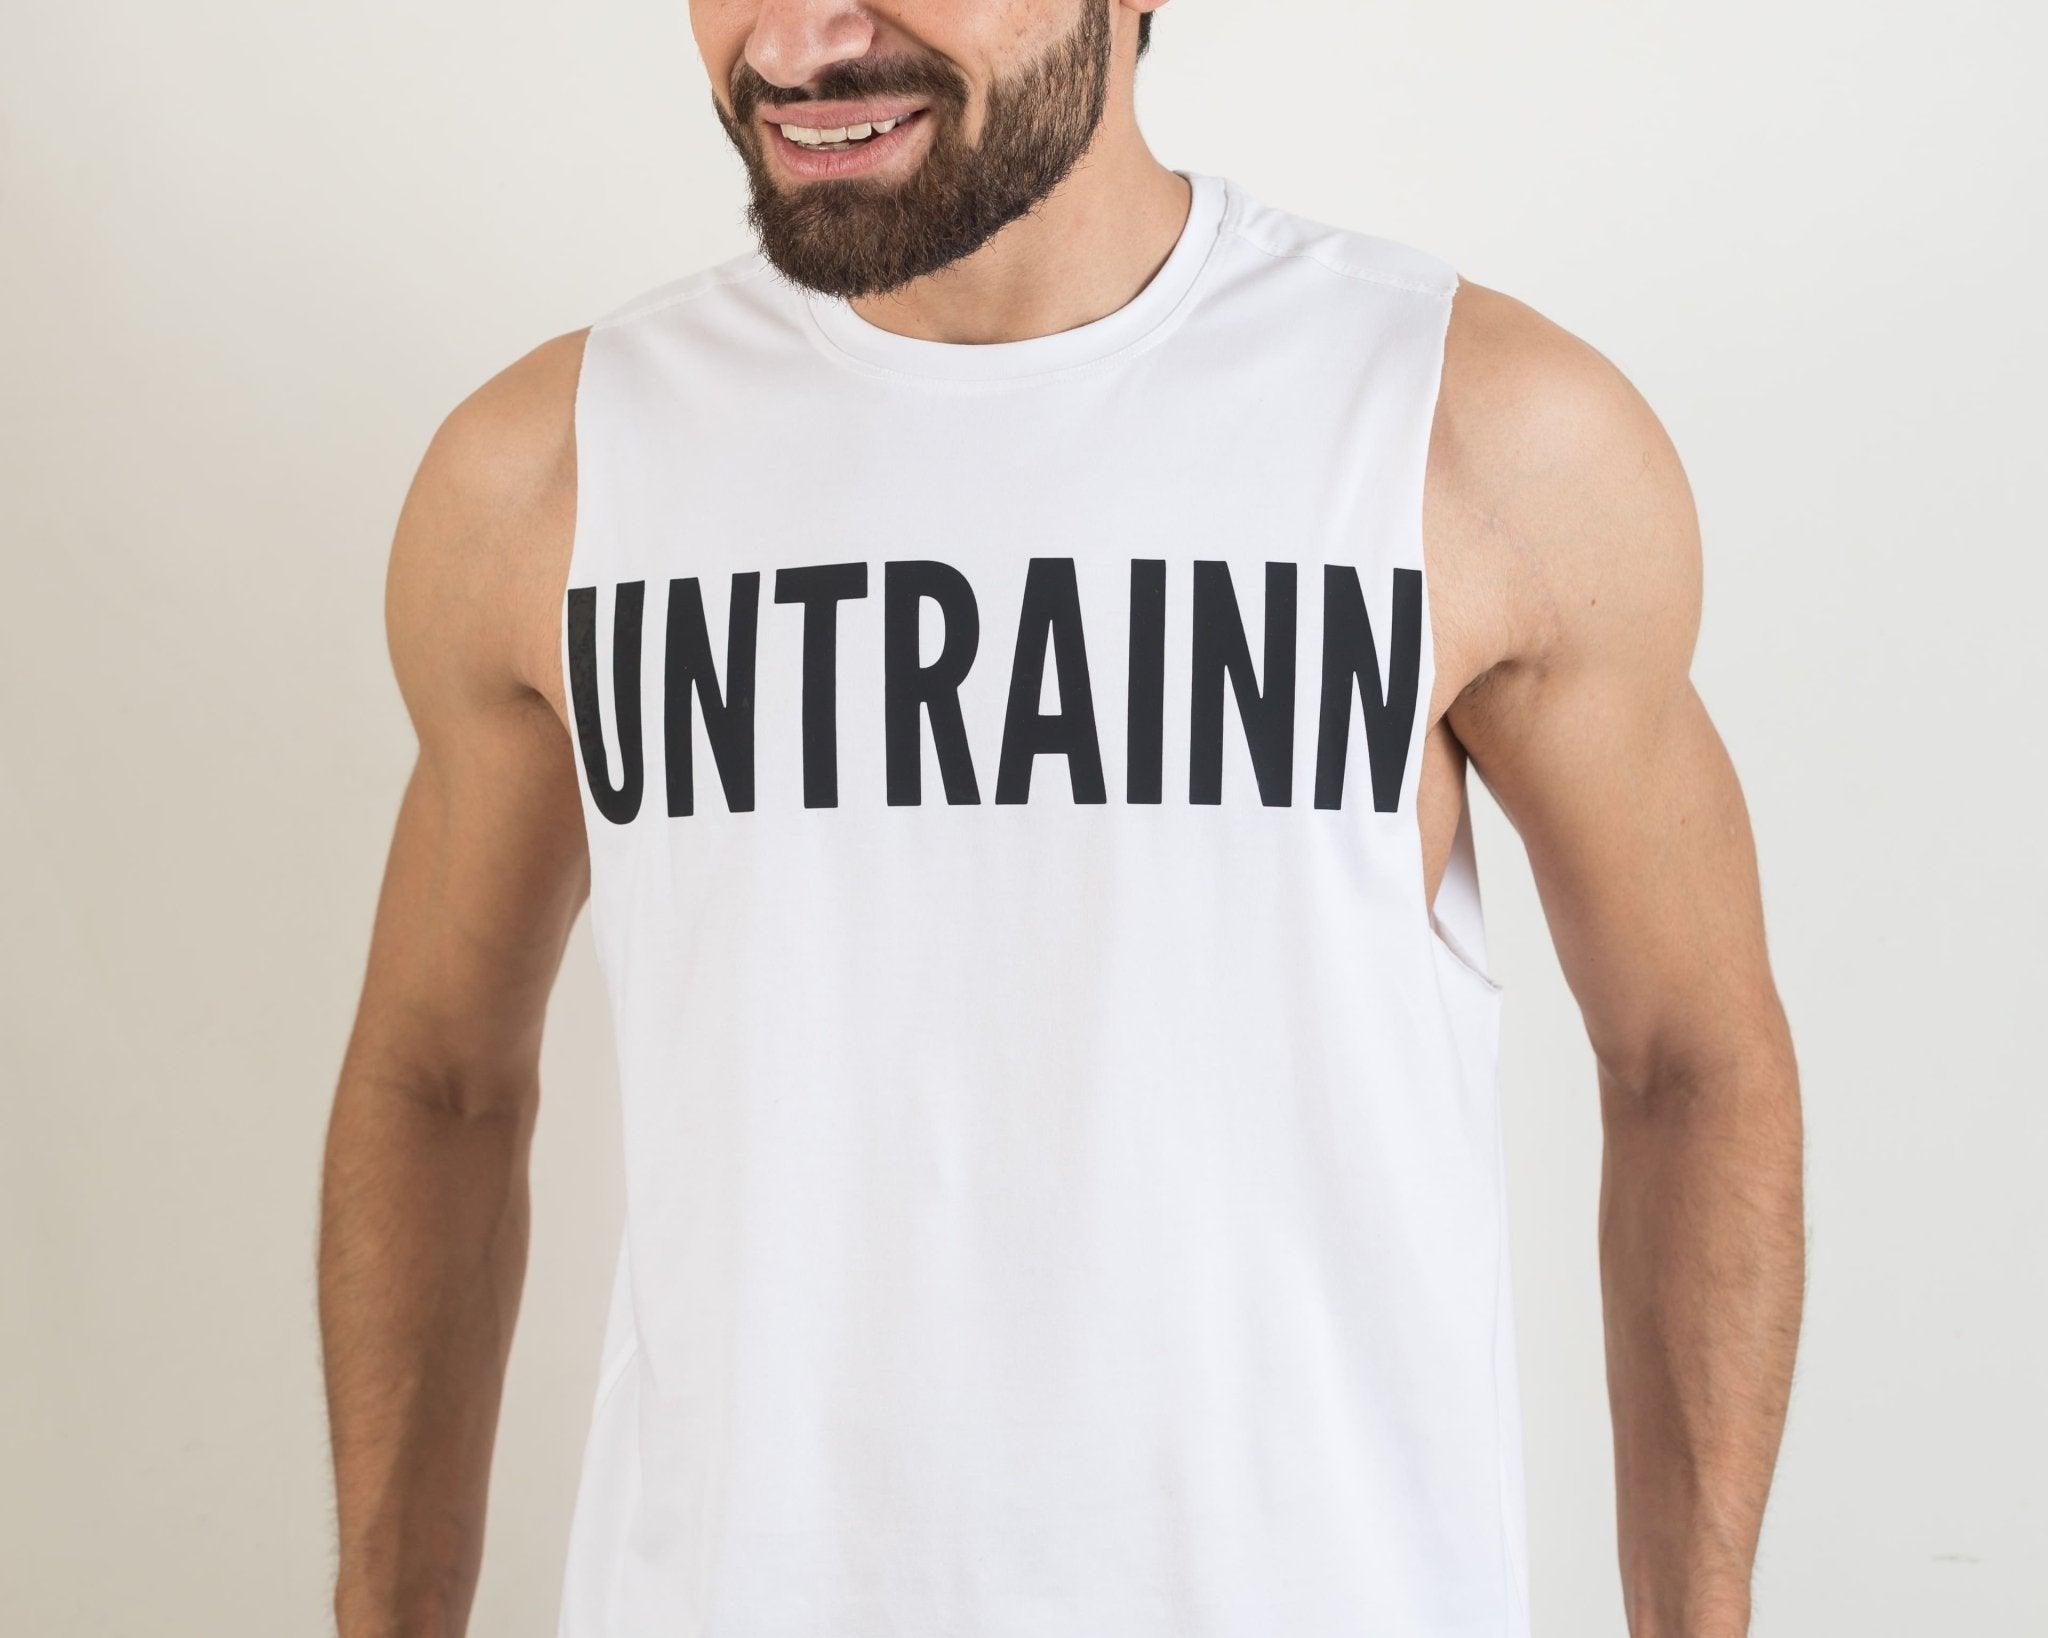 Untrain Men’s training tank top